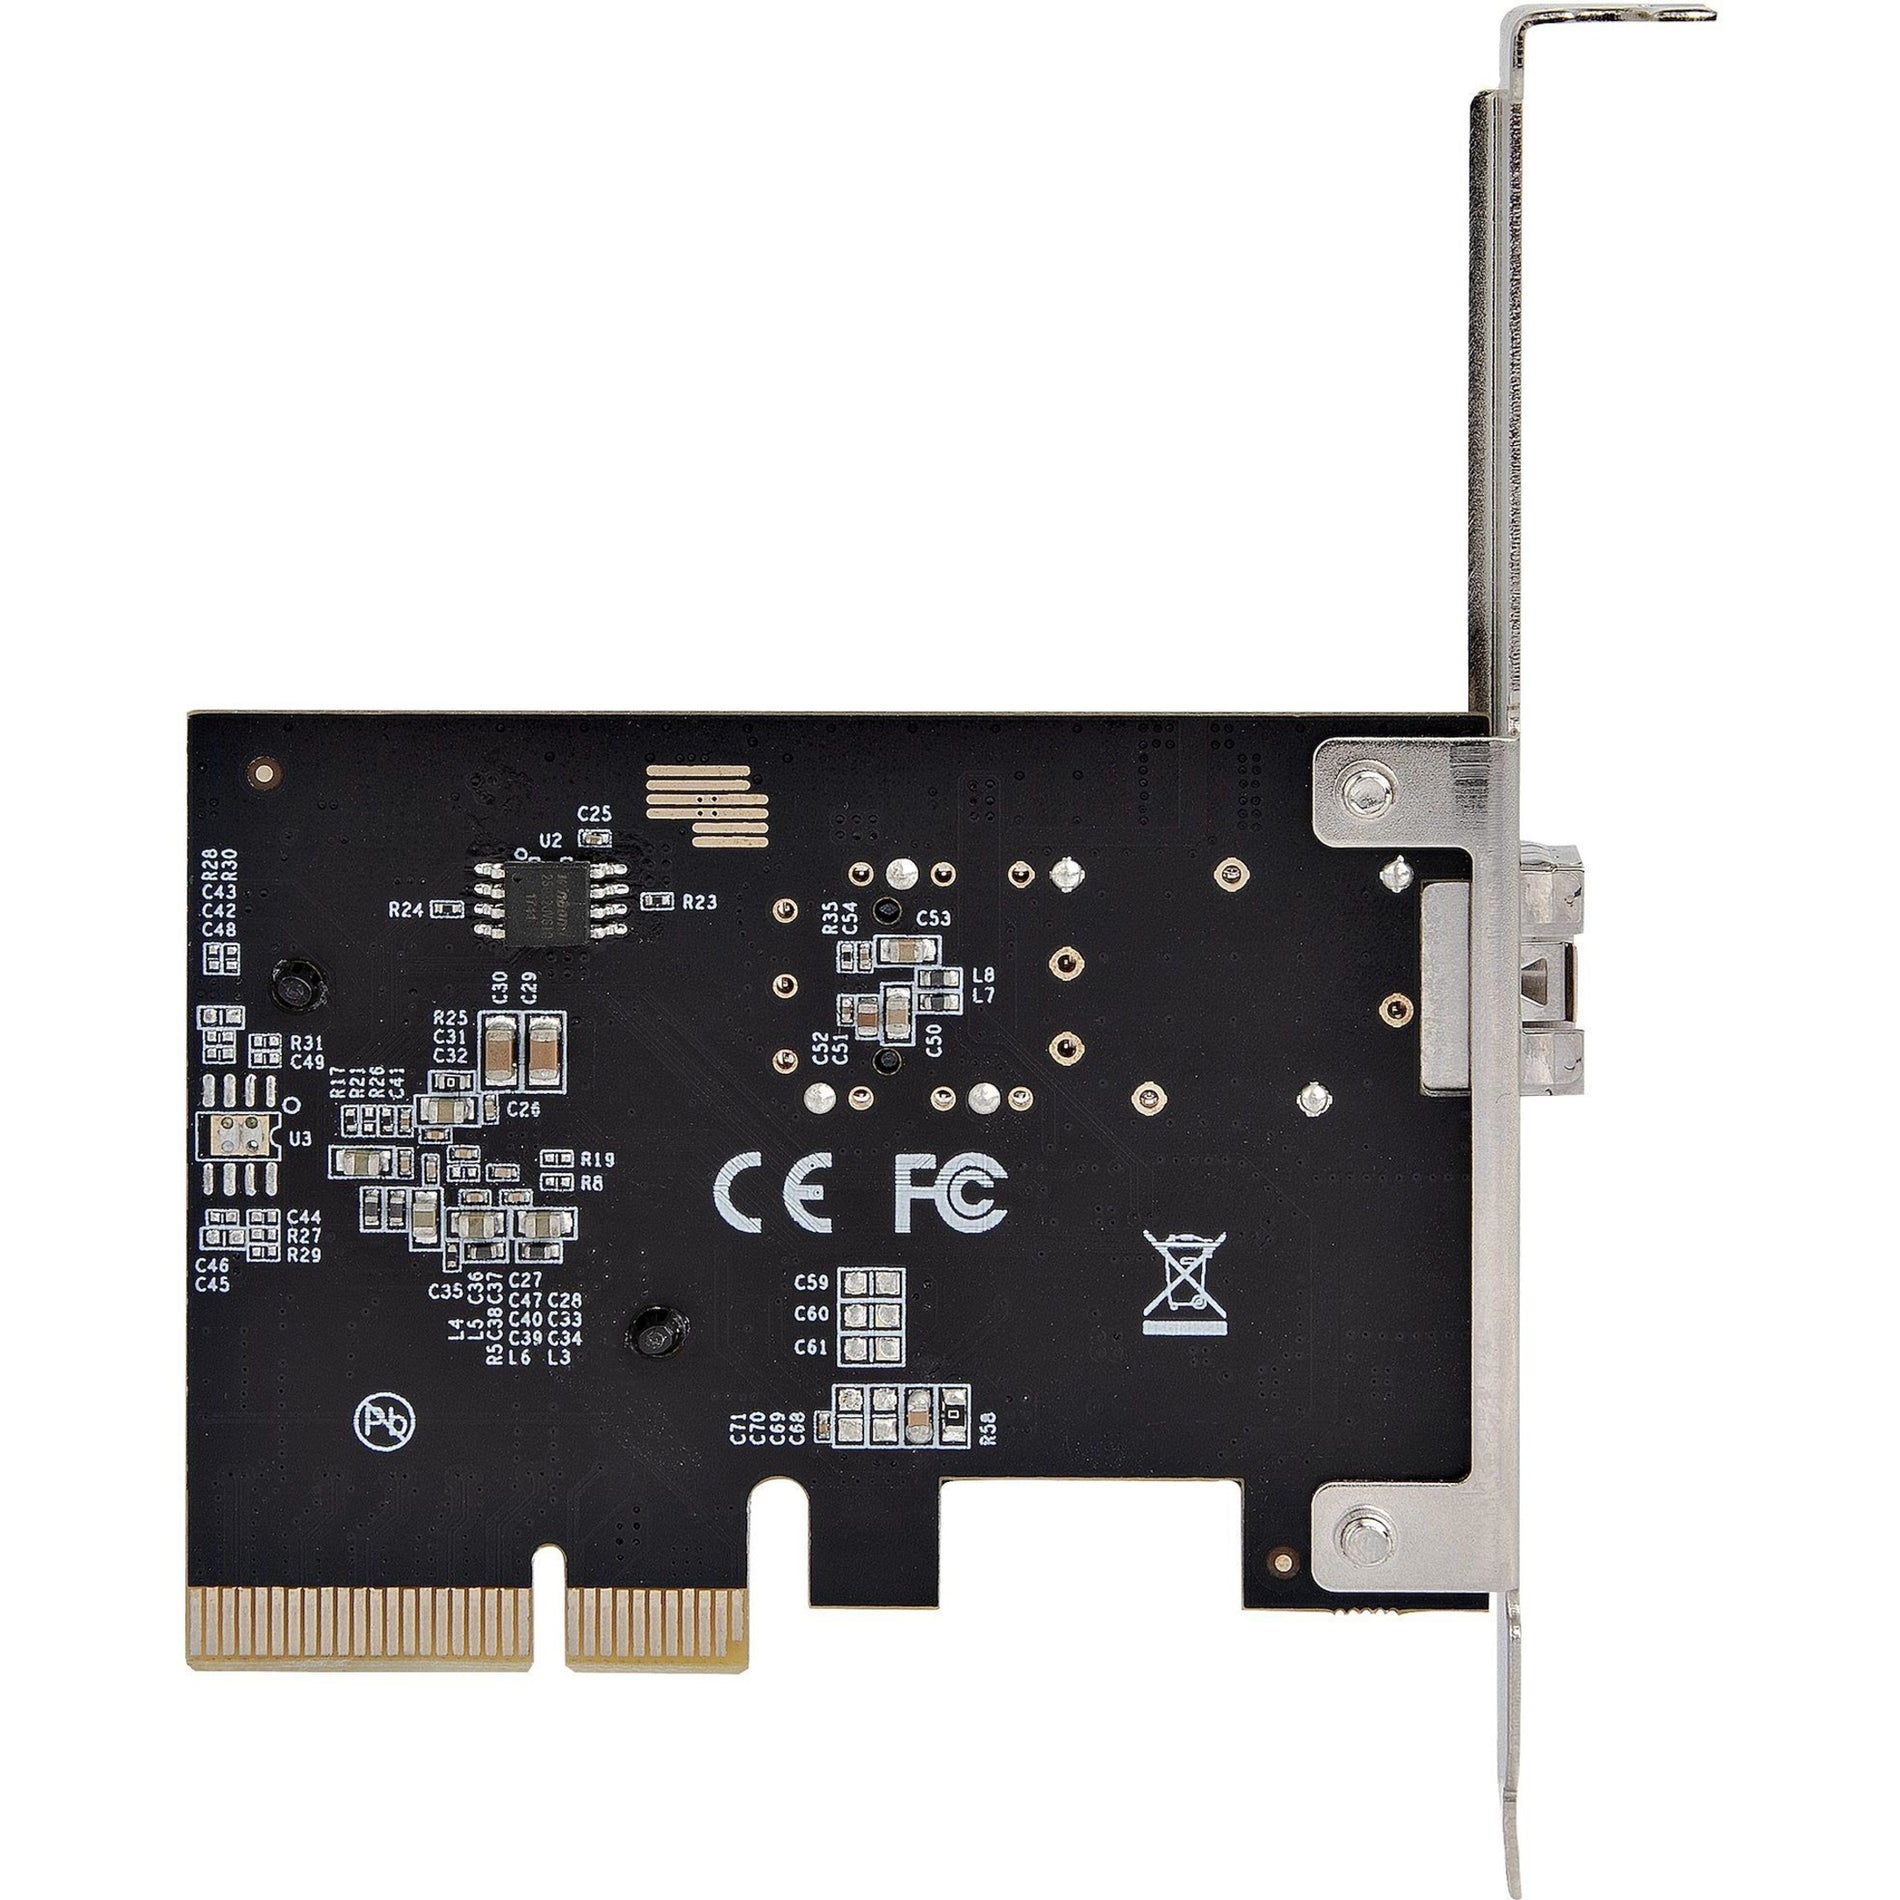 StarTech.com PEX10GSFP 10Gigabit Ethernet Card, Single SFP+ Port Network Adapter, Open SFP+ for MSA-Compliant Modules/Cables, 10 Gigabit PCIe NIC Card